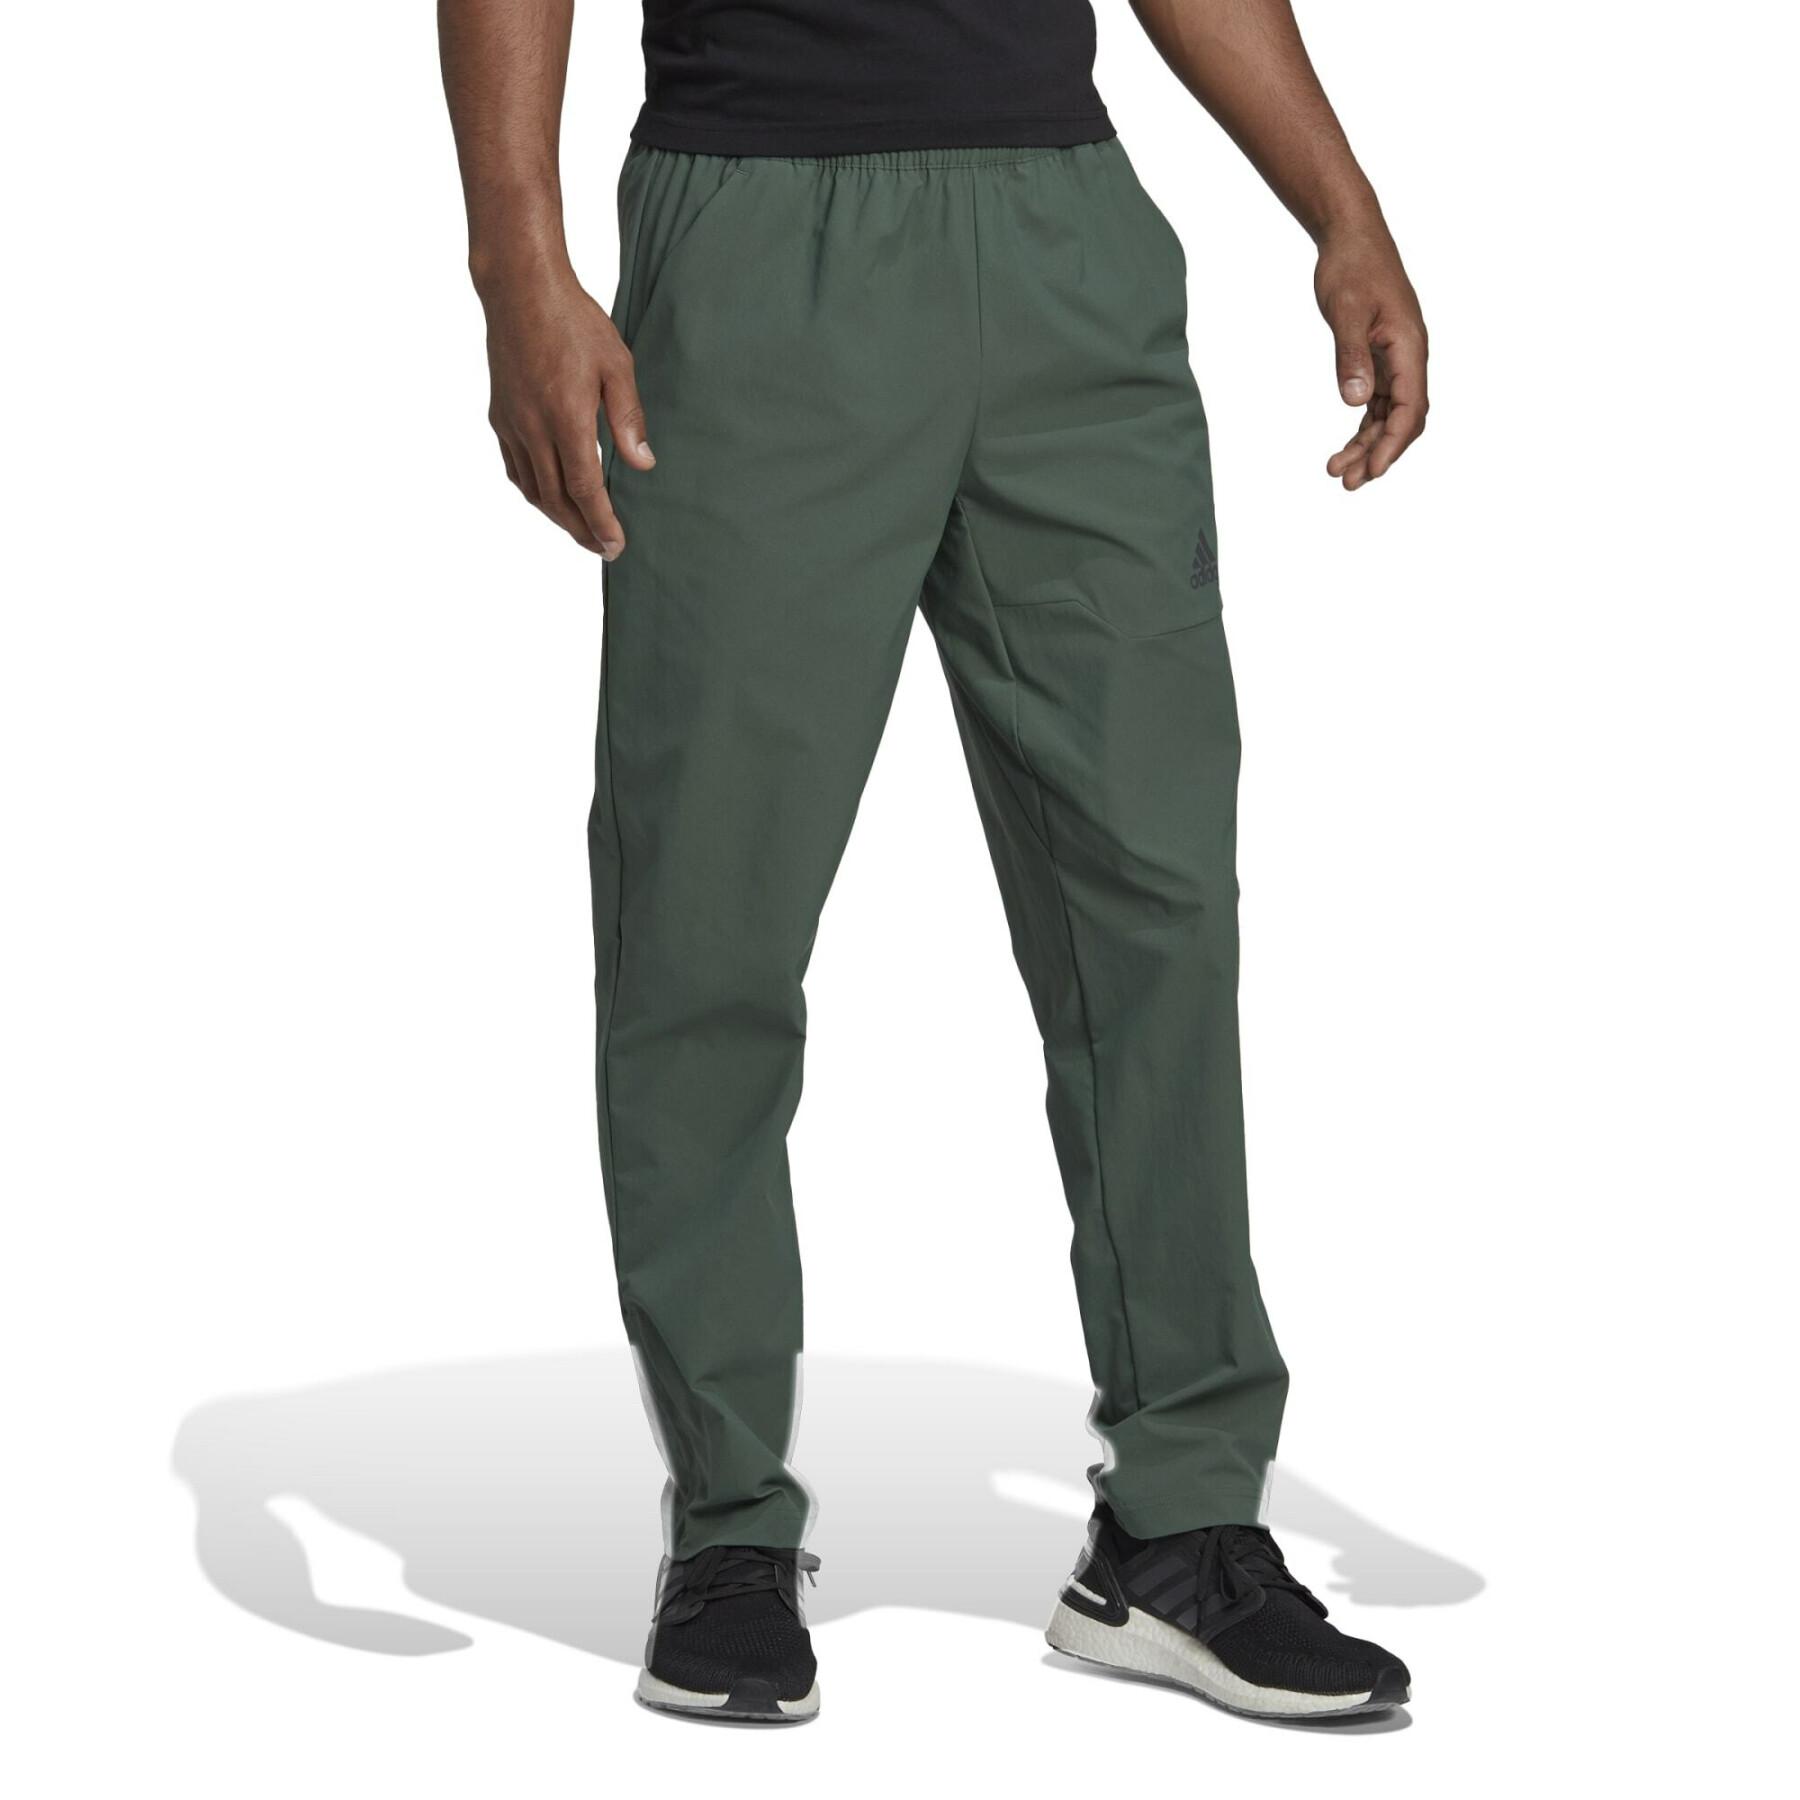 Tkany kombinezon do joggingu adidas Essentials Hero to Halo